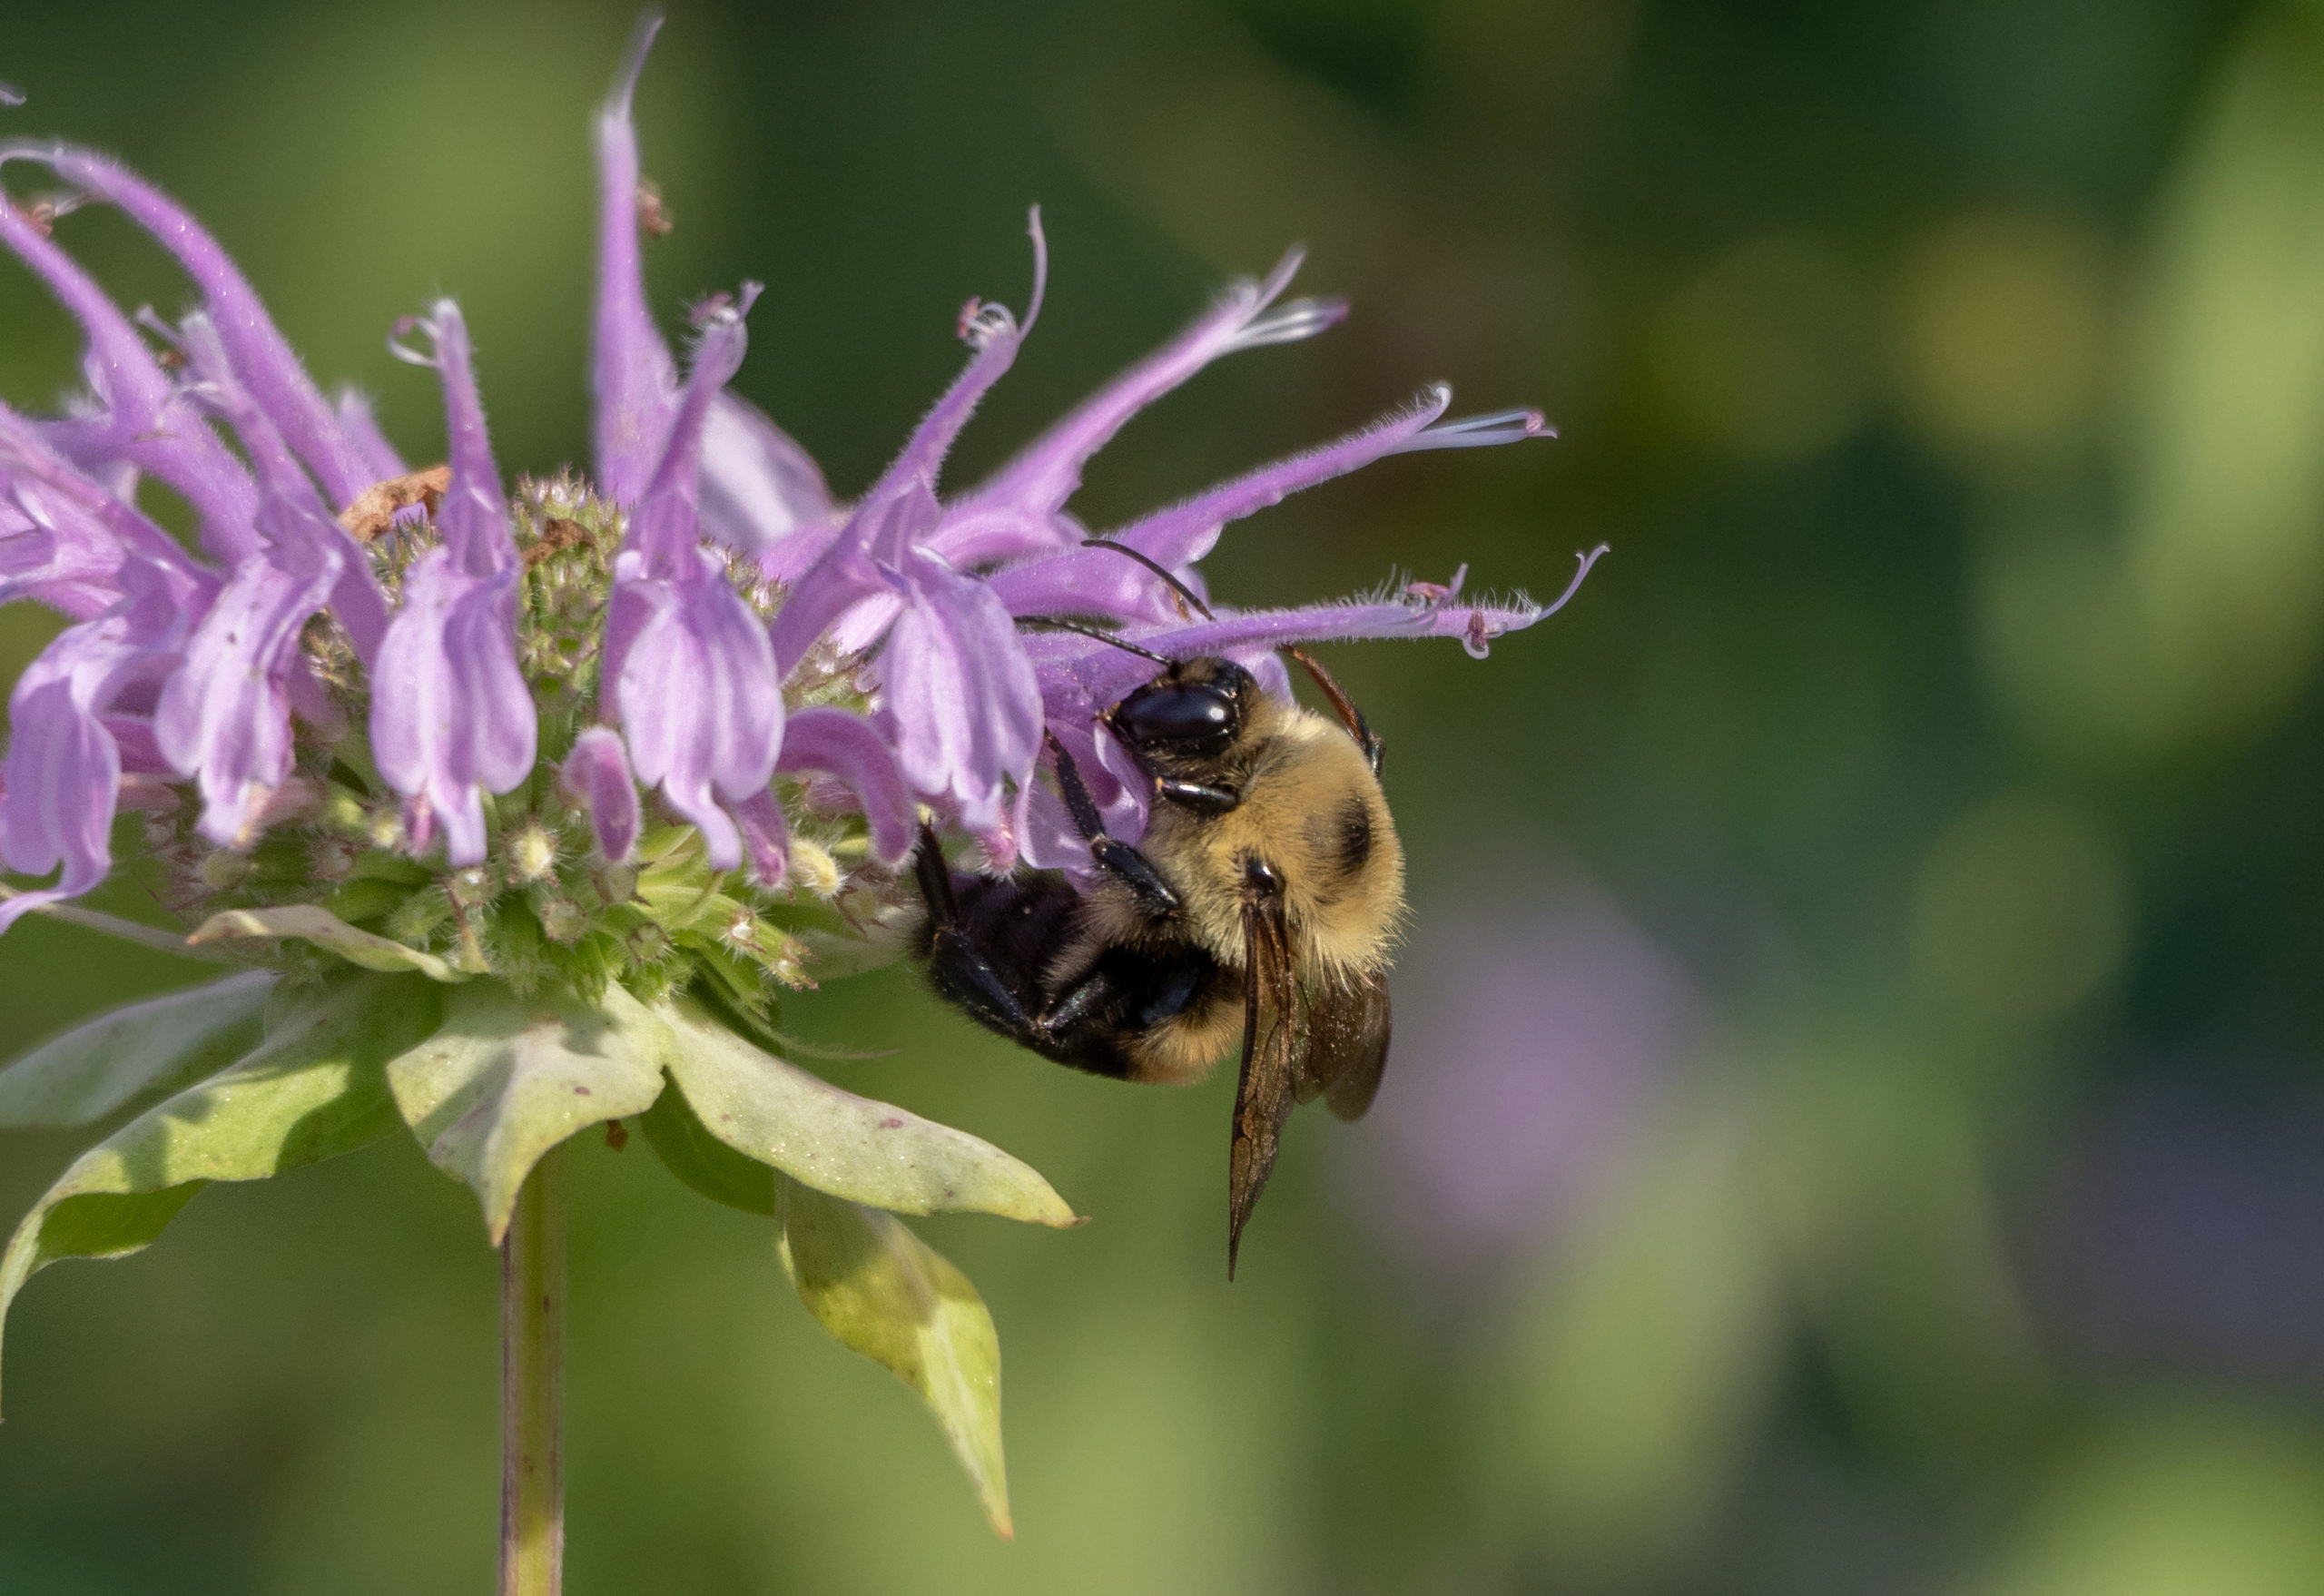 Bumblebee at the Evergreen Brickworks, Toronto